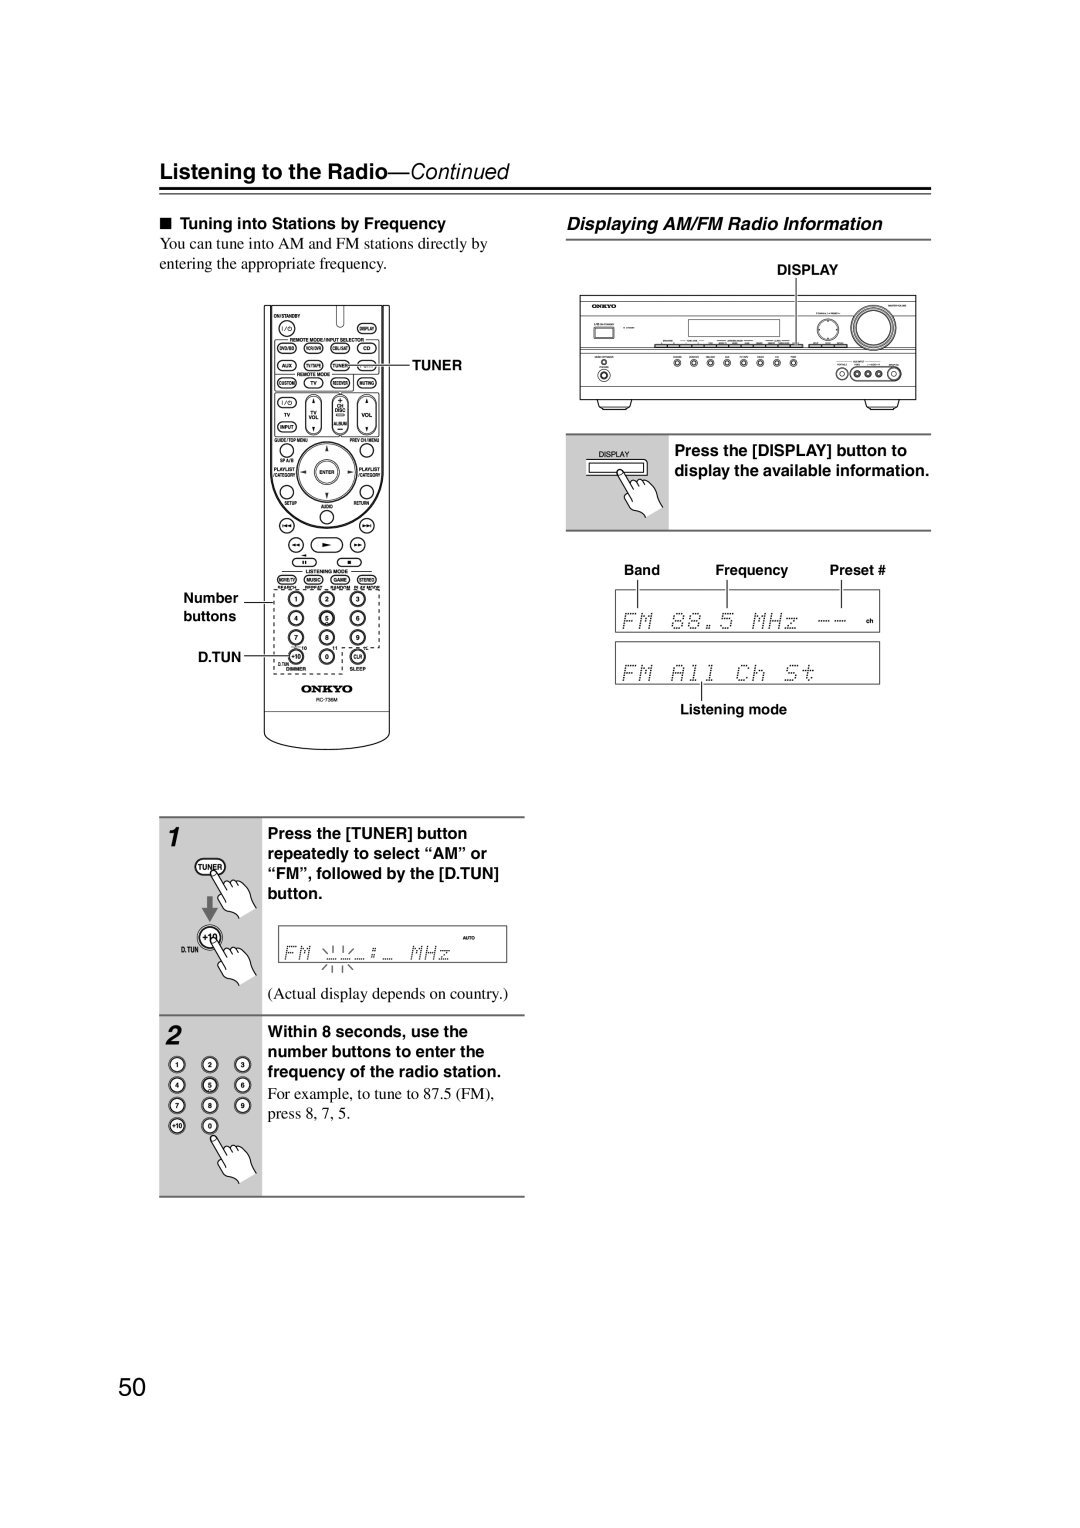 Onkyo HT-S5200 instruction manual Displaying AM/FM Radio Information 